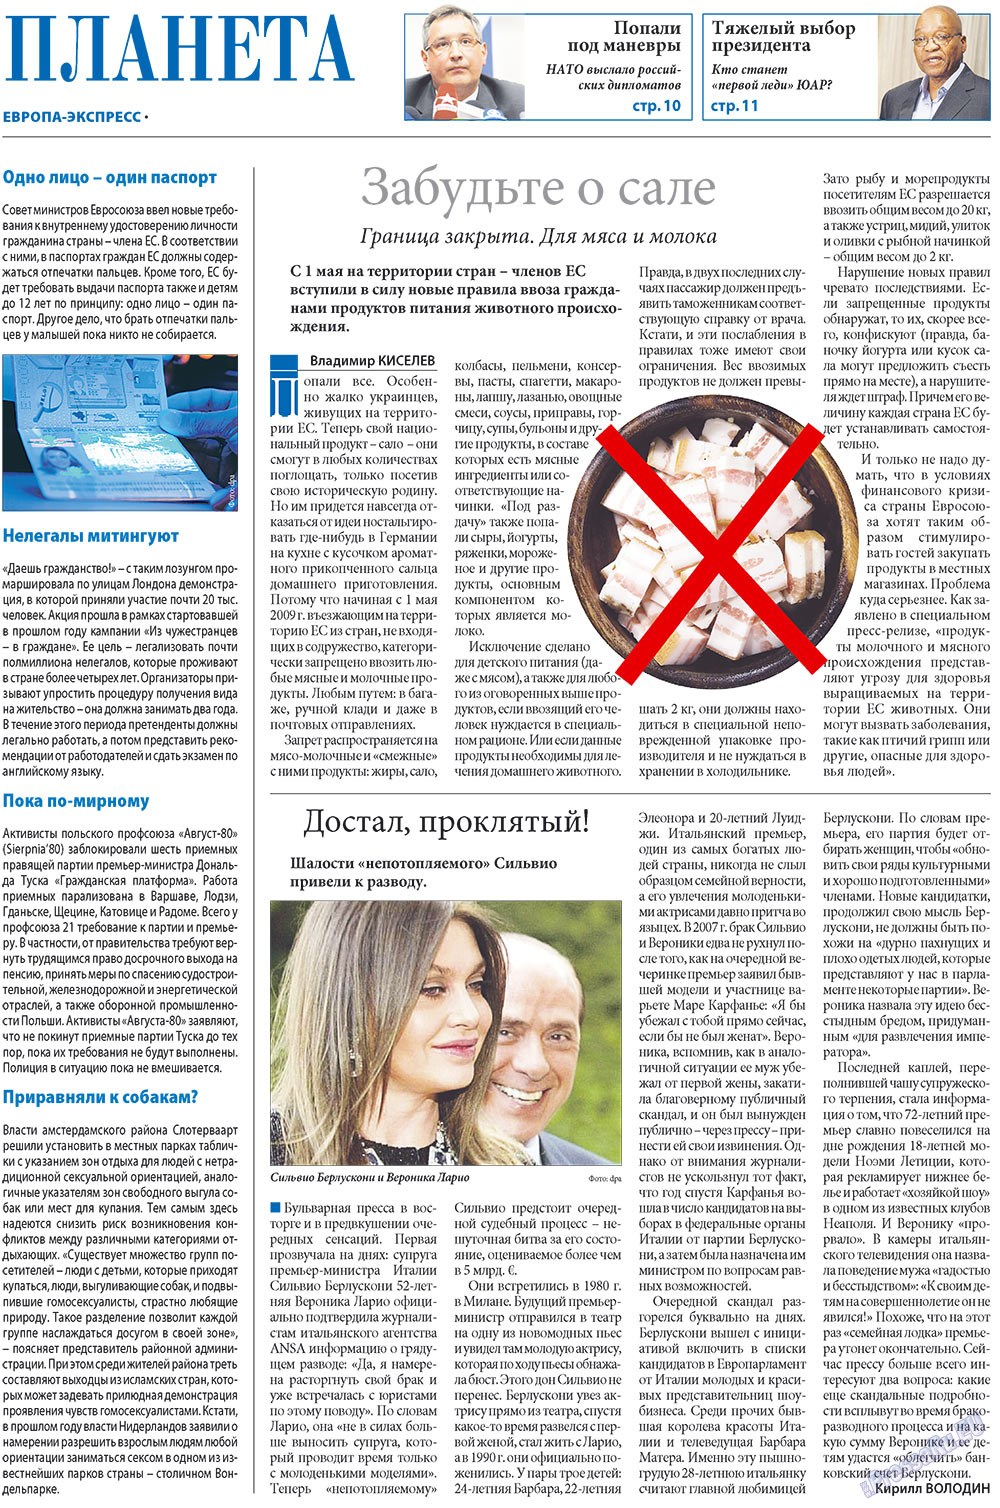 Европа экспресс (газета). 2009 год, номер 19, стр. 8